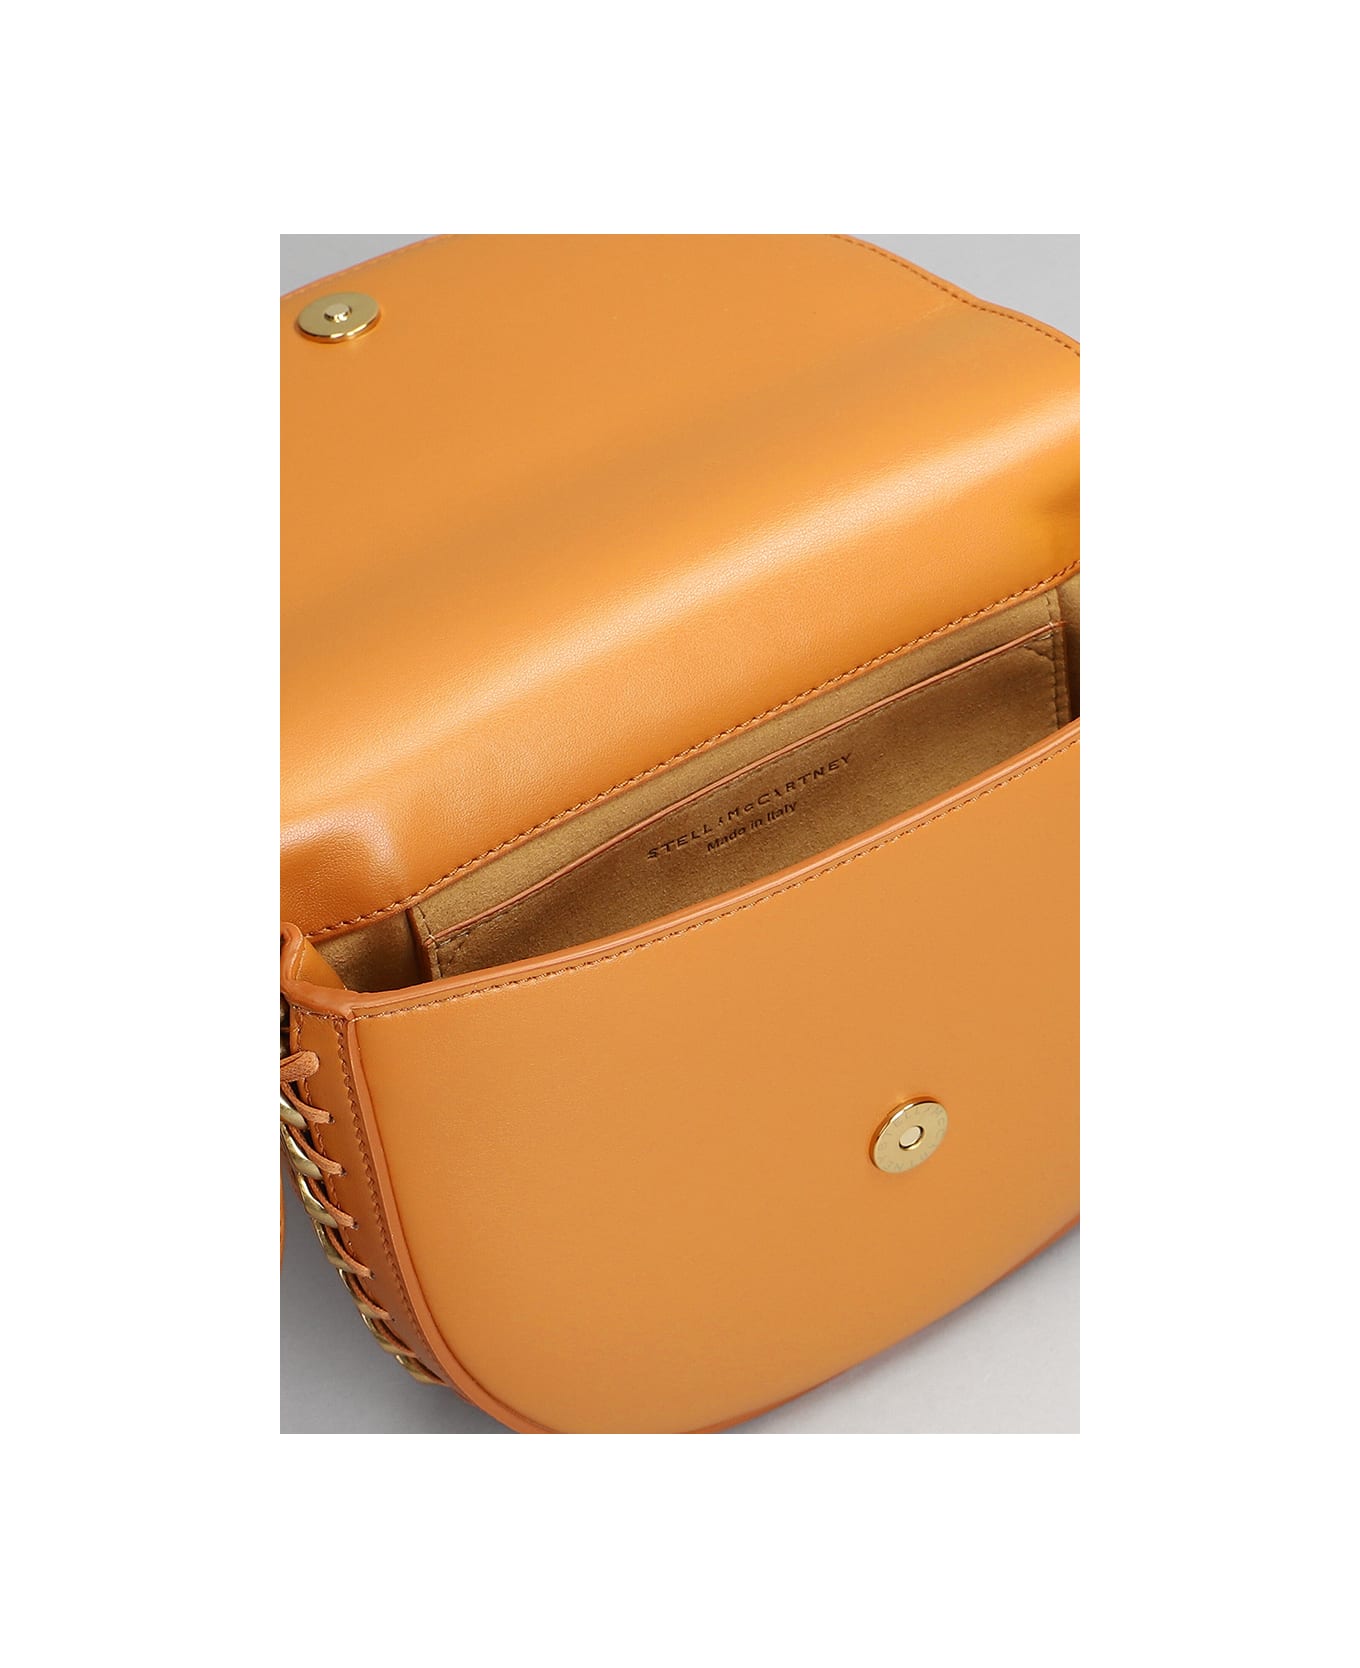 Stella McCartney Alter Mat Shoulder Bag In Orange Faux Leather - Cuoio